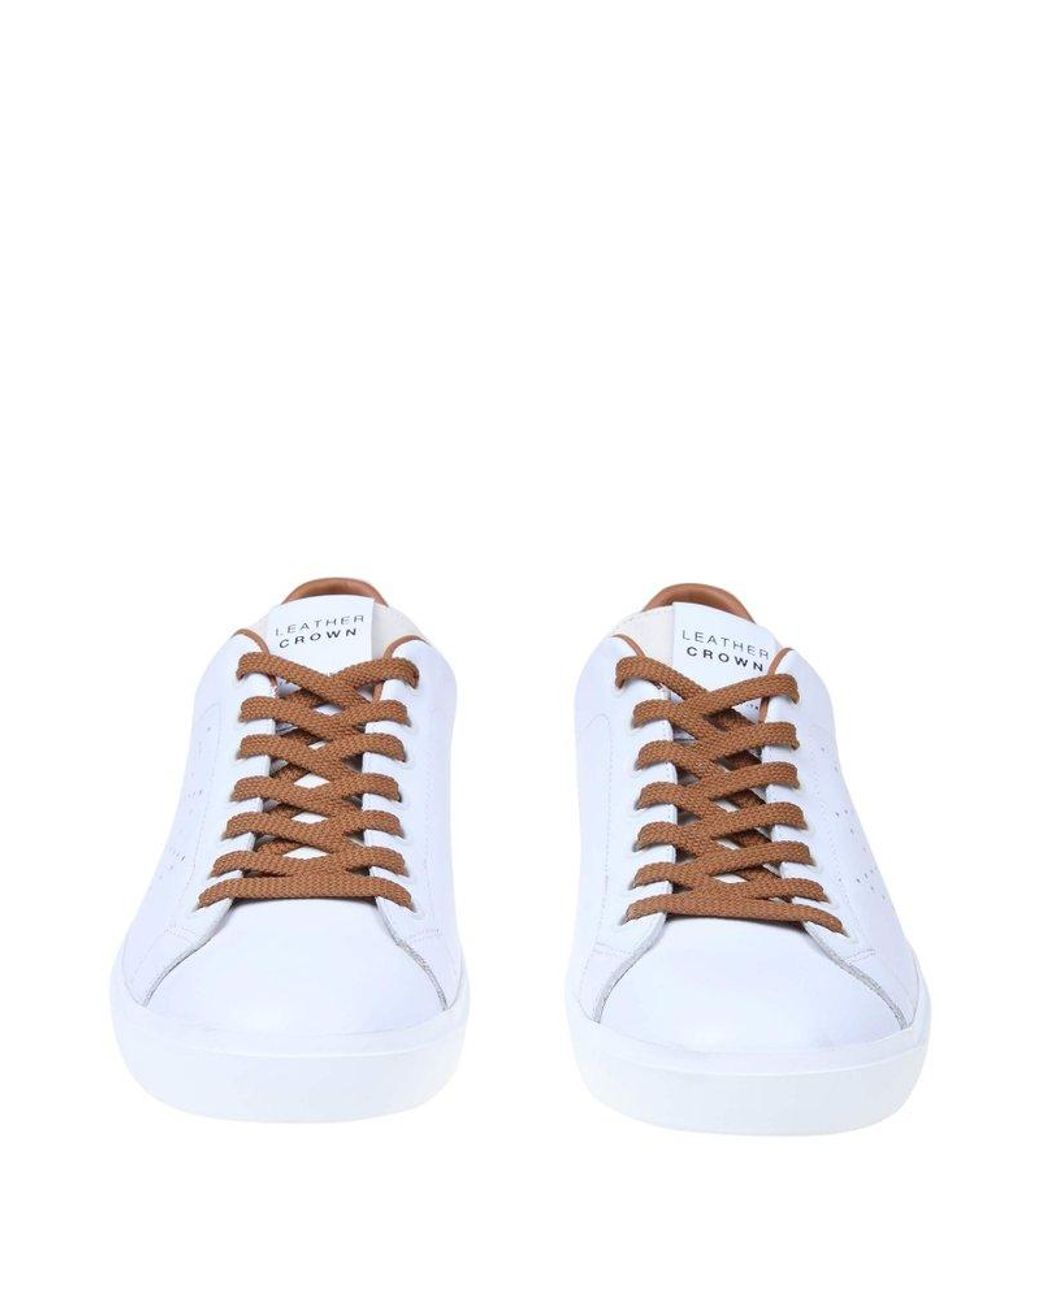 Leather Crown Cream Hi-Top Sneakers Size 40 US 9-10 | eBay